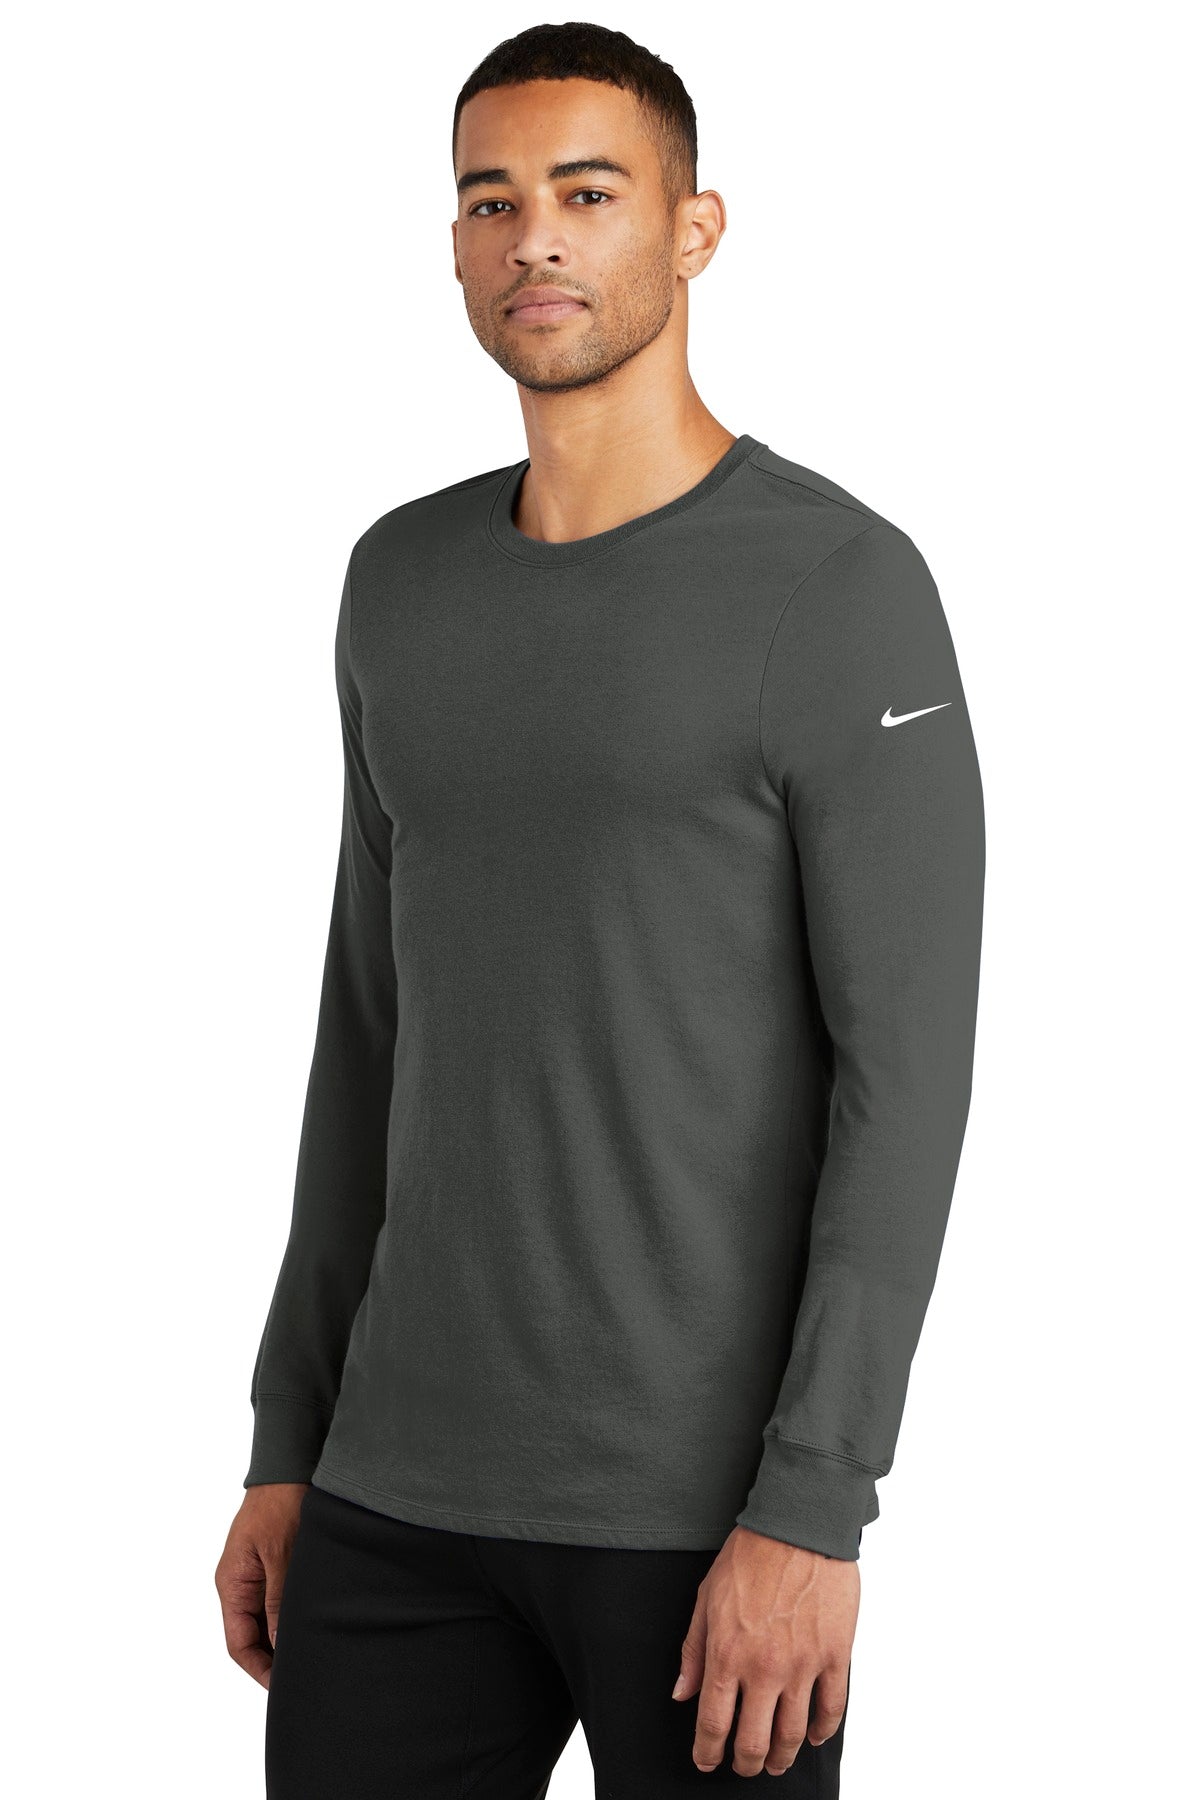 Nike Dri-FIT Cotton/Poly Long Sleeve Tee. NKBQ5230 - BT Imprintables Shirts